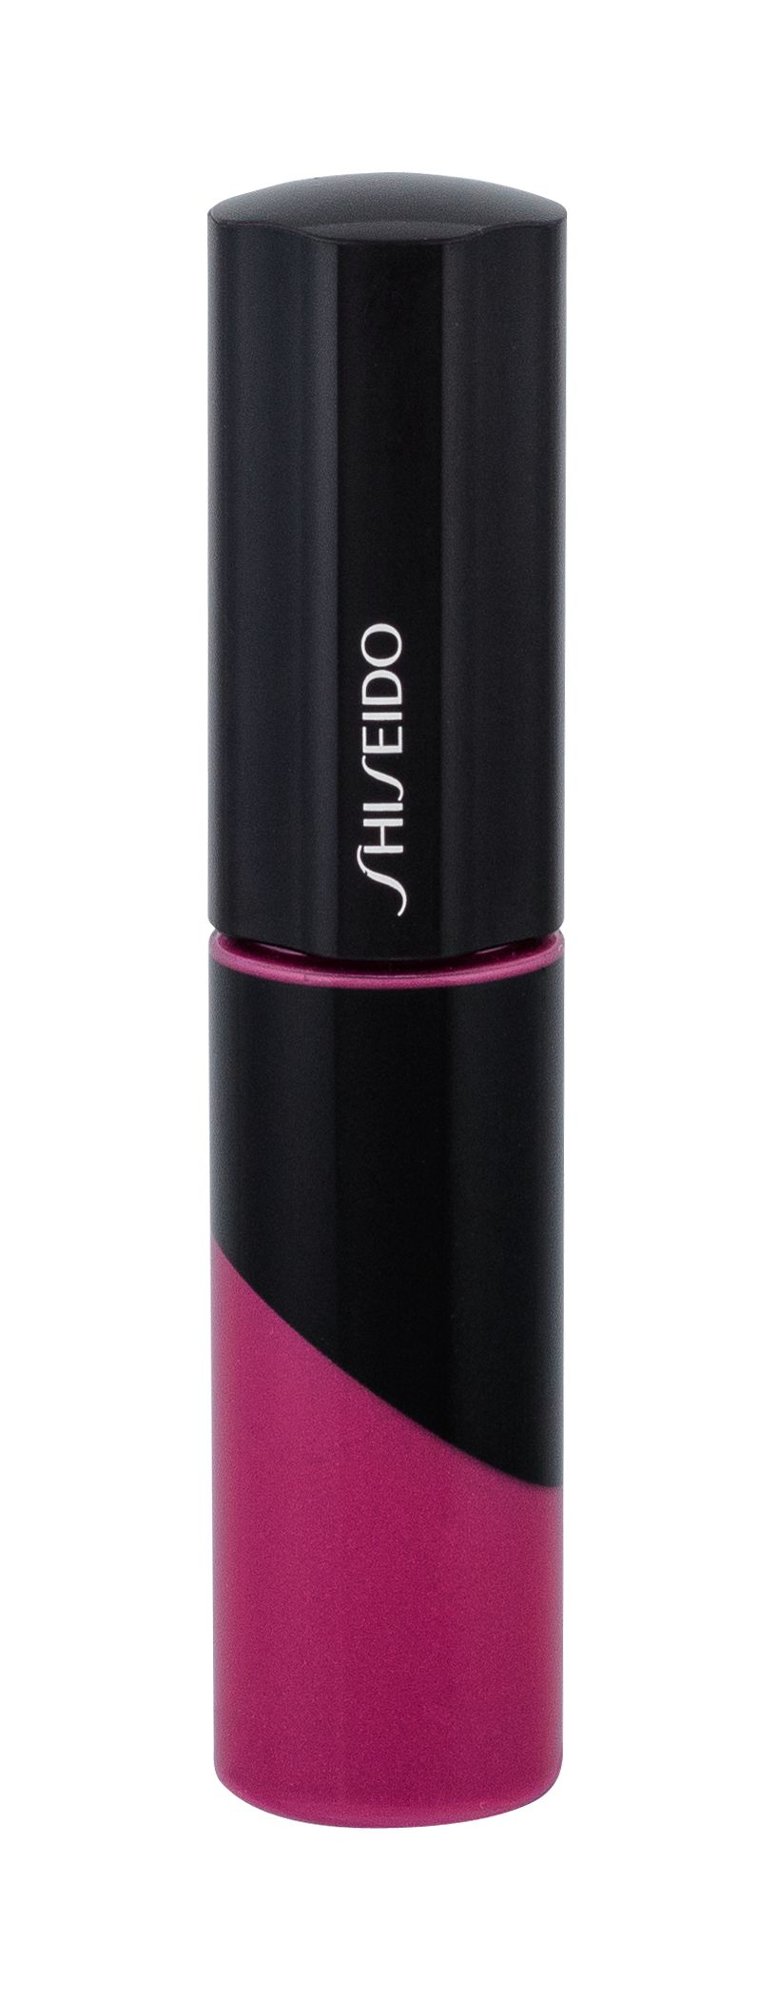 Shiseido Lacquer Gloss lūpų blizgesys